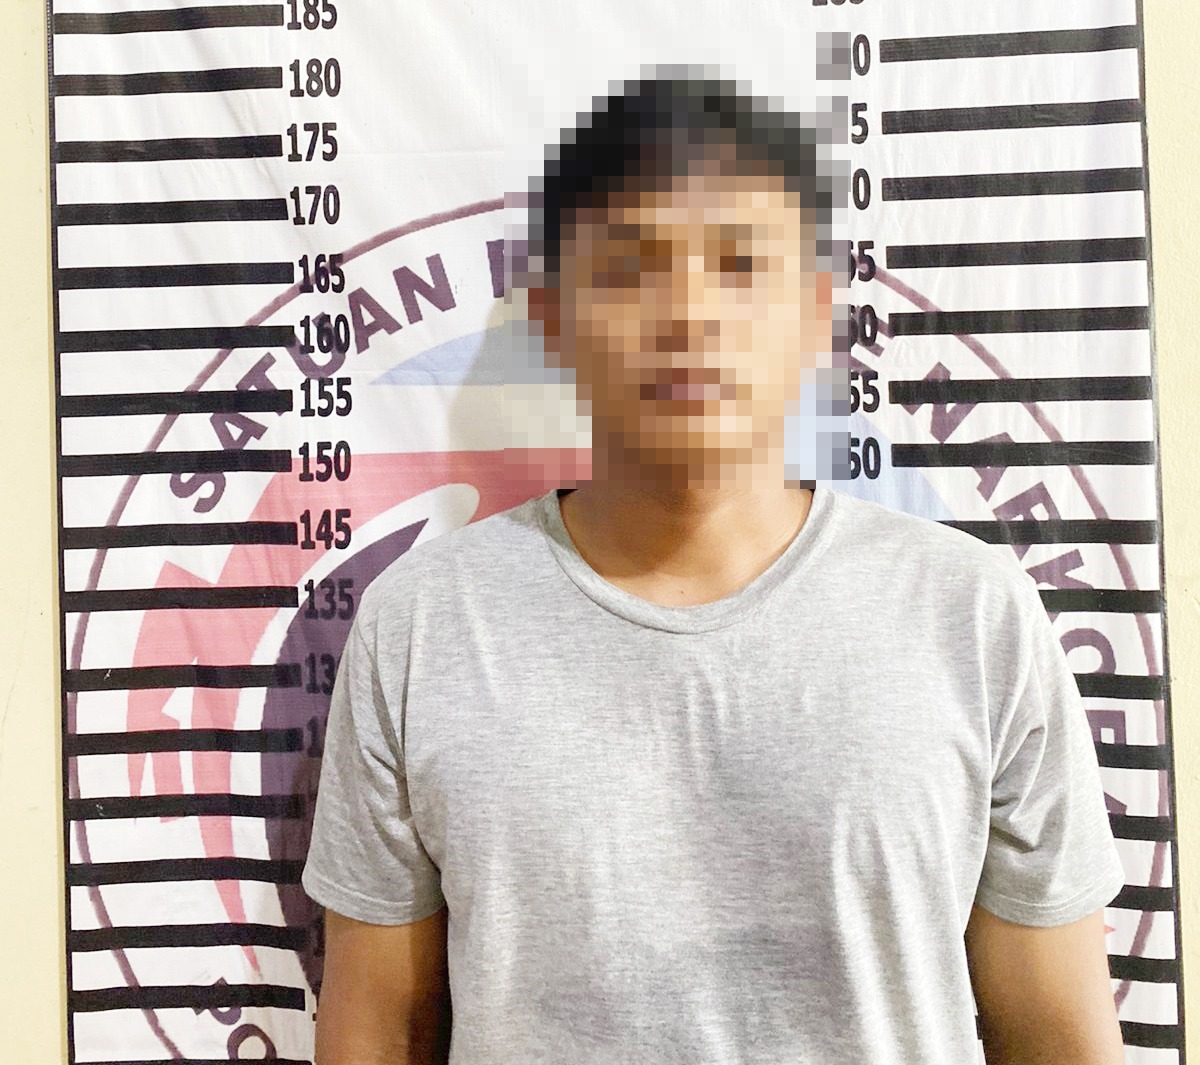 Satuan Reserse Narkoba (Satresnarkoba) Polres Tulang Bawang, Polda Lampung, berhasil menangkap pelaku tindak pidana penyalahgunaan narkotika